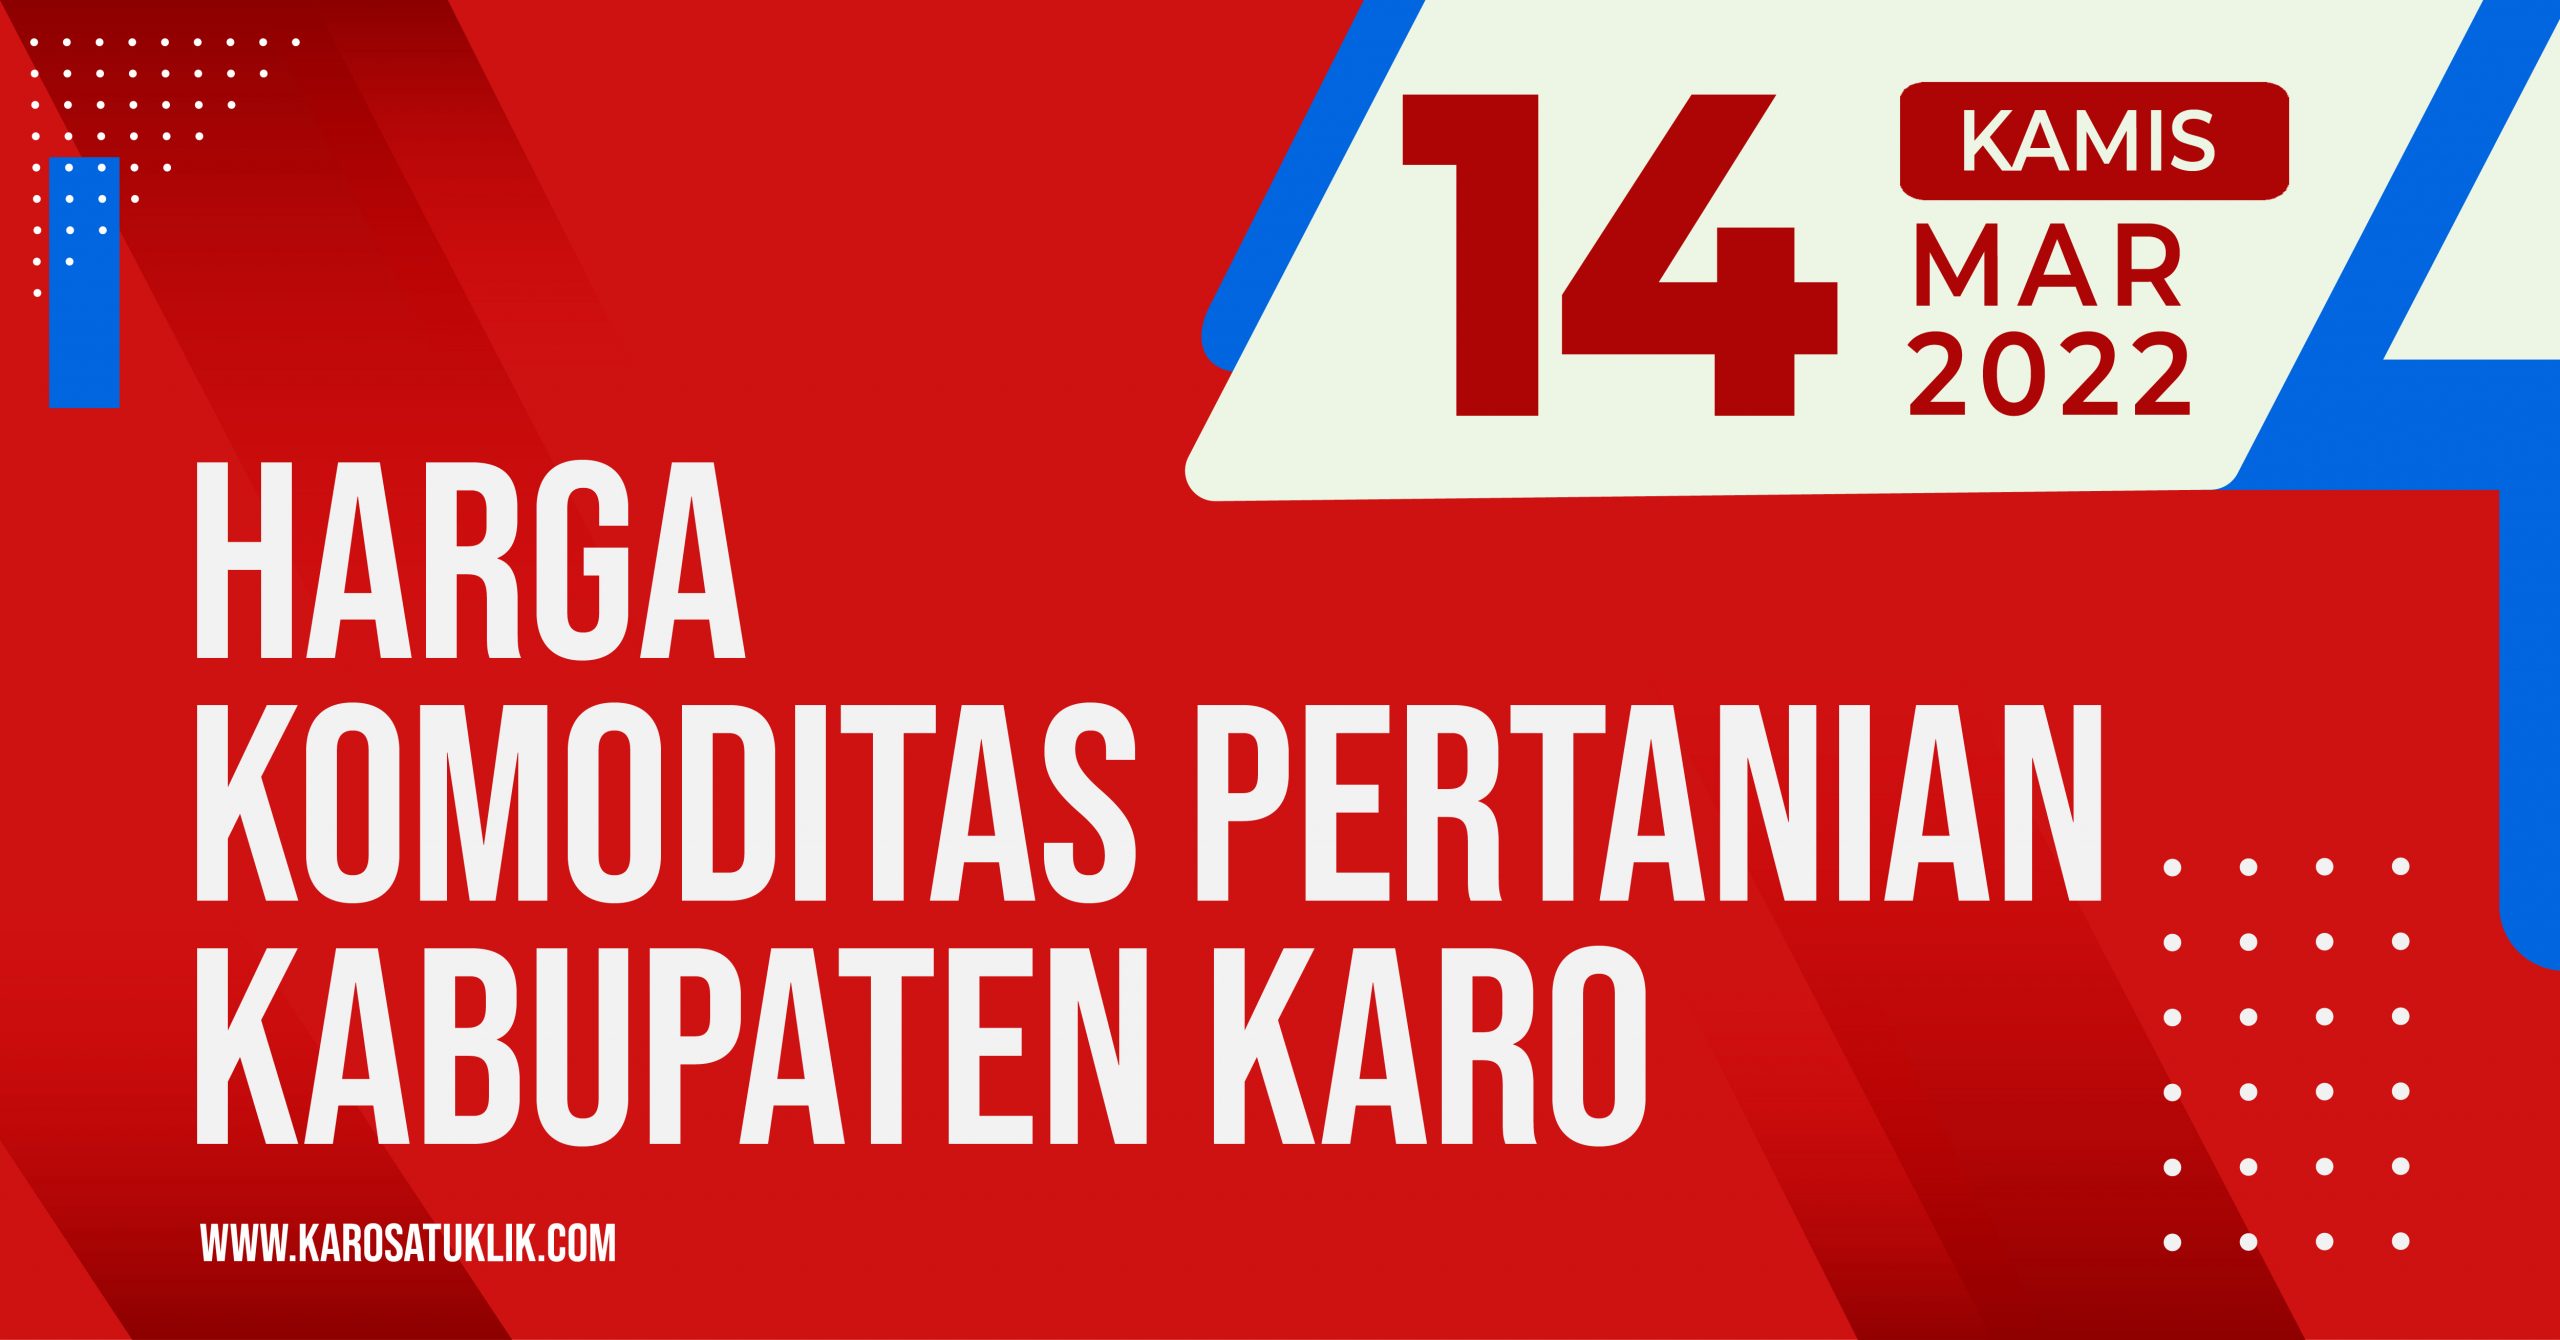 Daftar Harga Komoditas Pertanian Kabupaten Karo, Kamis 14 April 2022